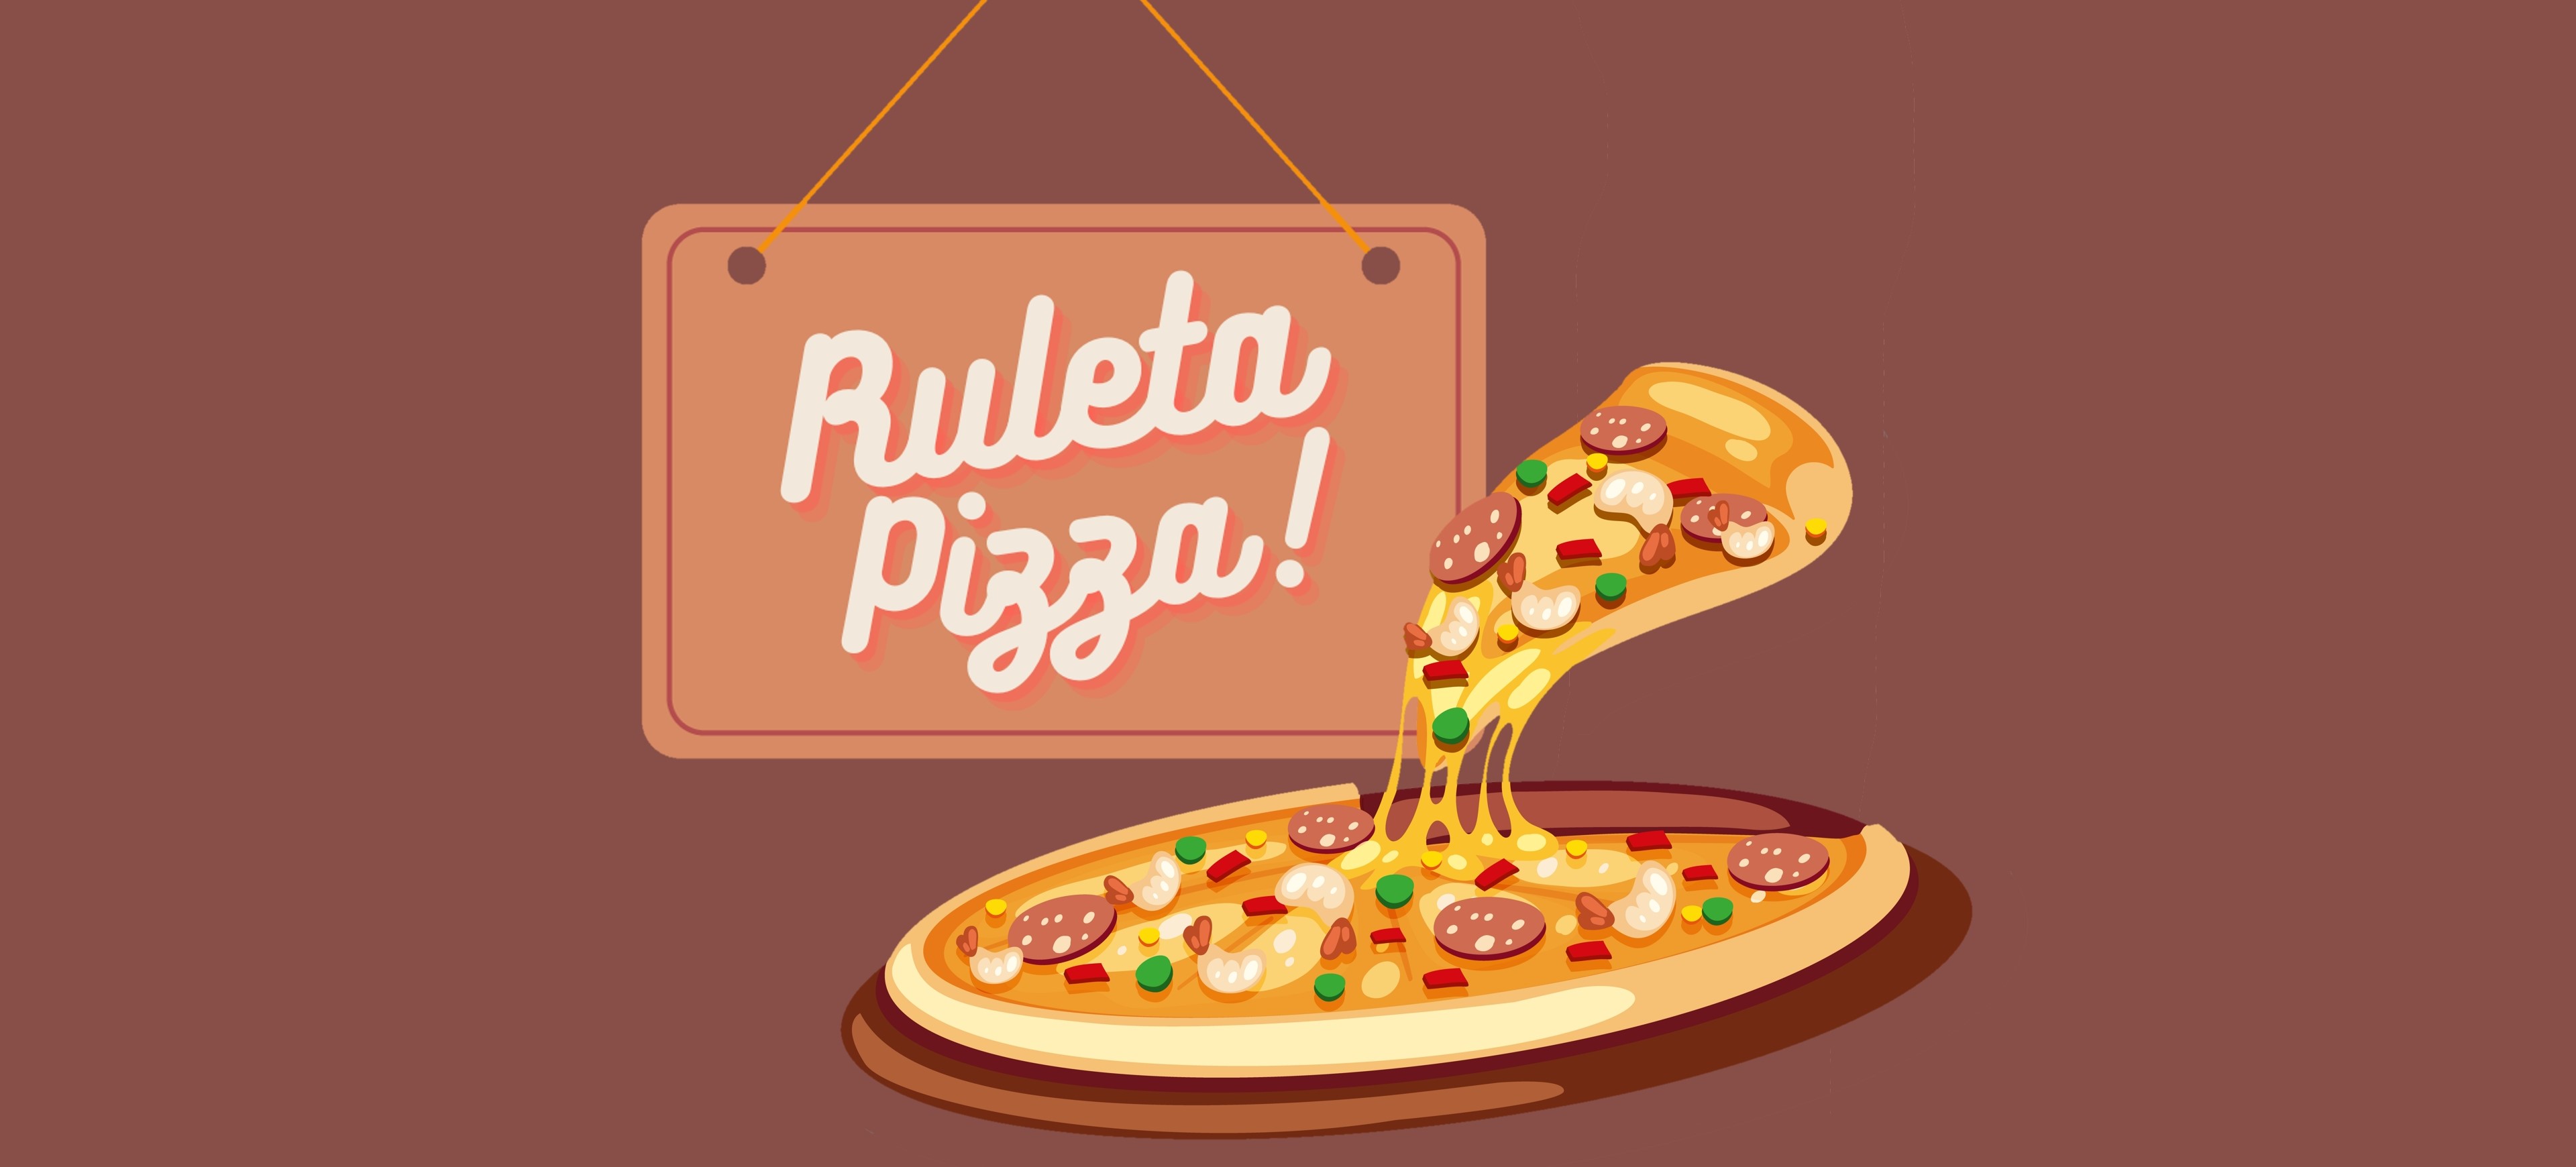 Ruleta Pizza!